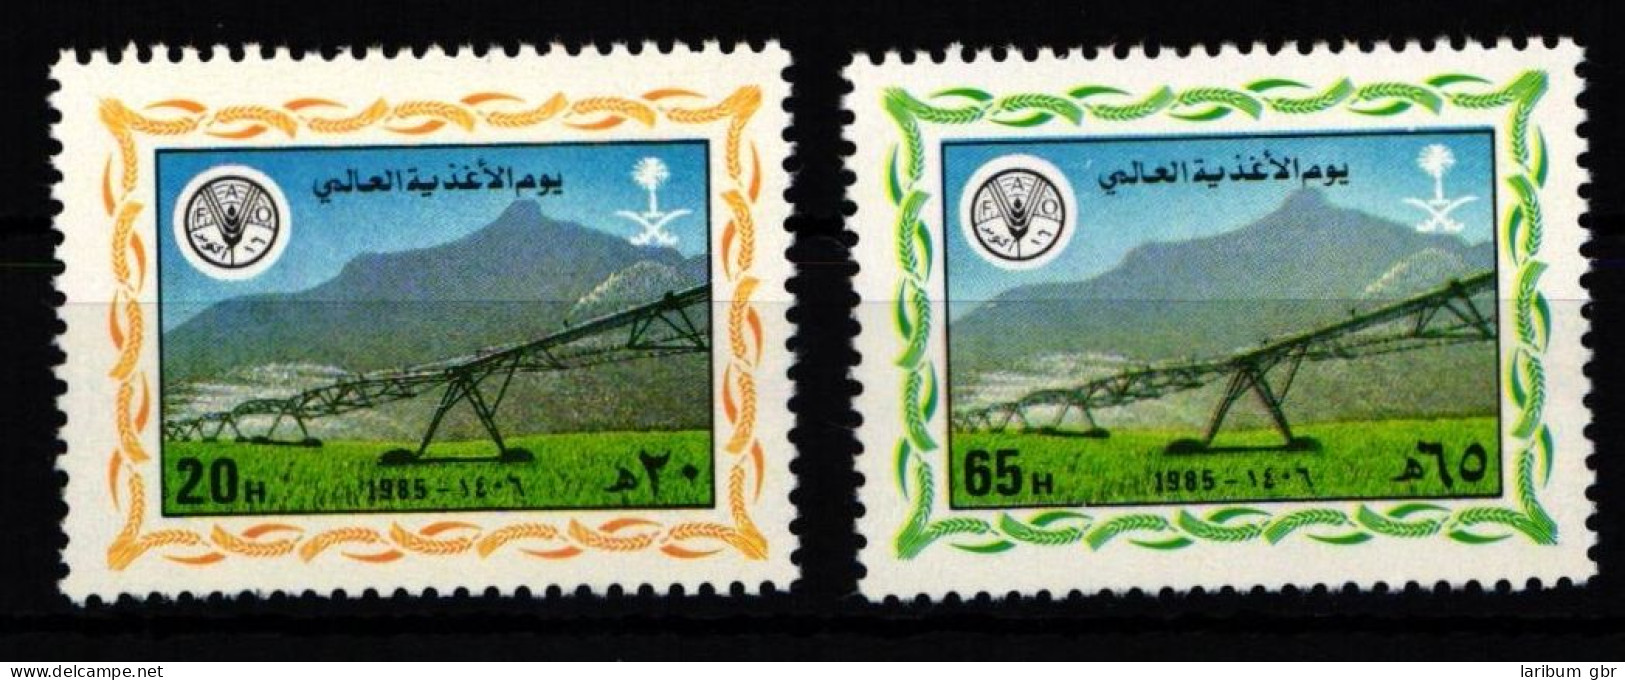 Saudi Arabien 824-825 Postfrisch #JZ627 - Saudi Arabia